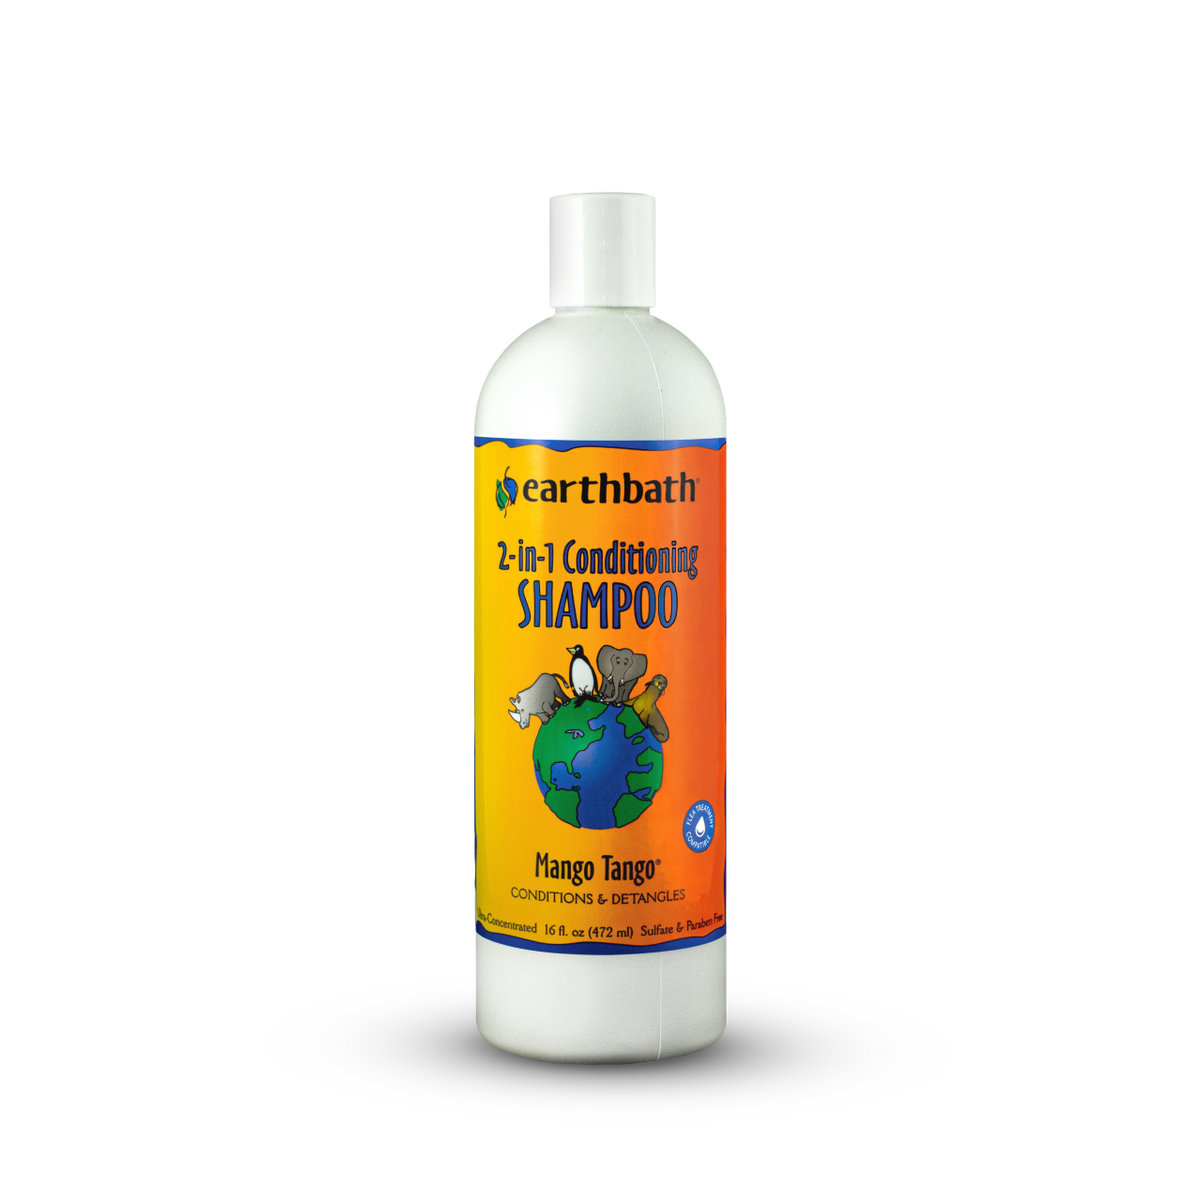 Earthbath - Mango Tango 2-in-1 Conditioning Shampoo